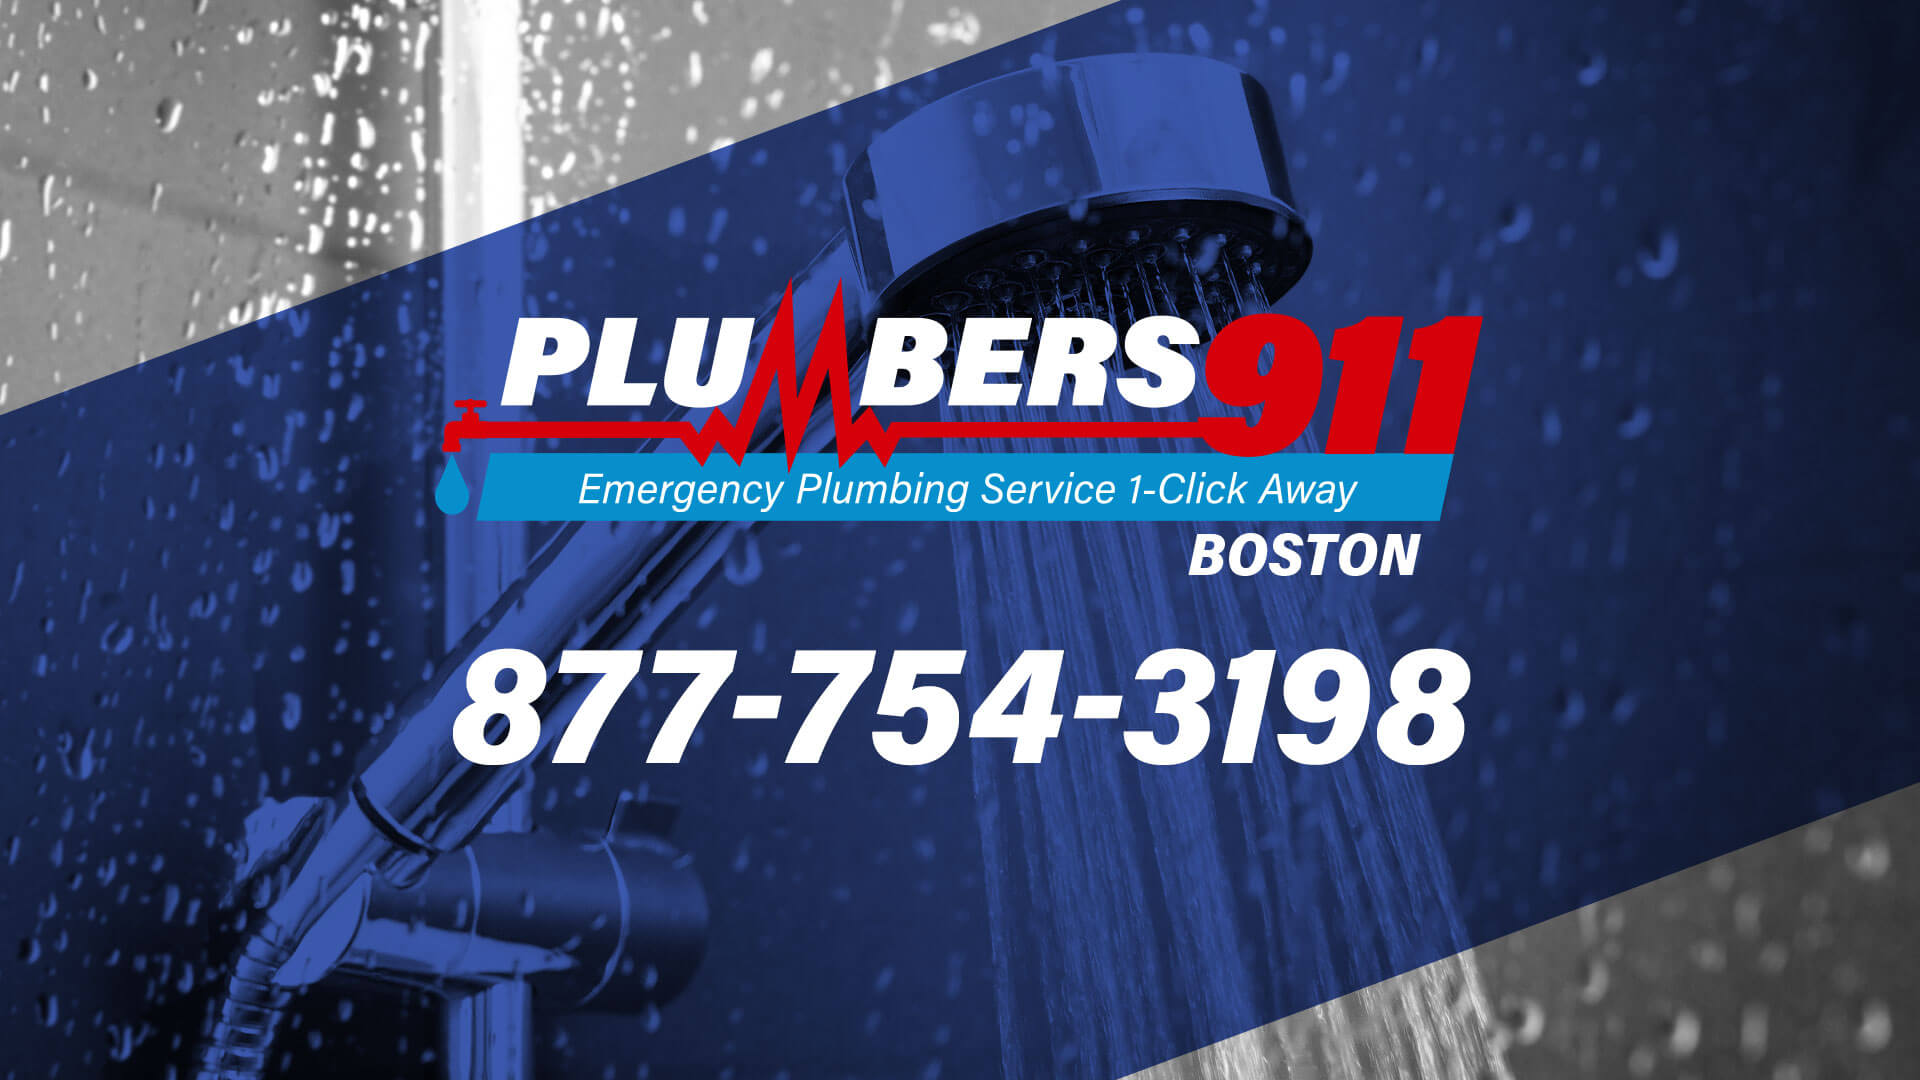 Plumbers911 BOSTON Blog Images Bathroom Shower 